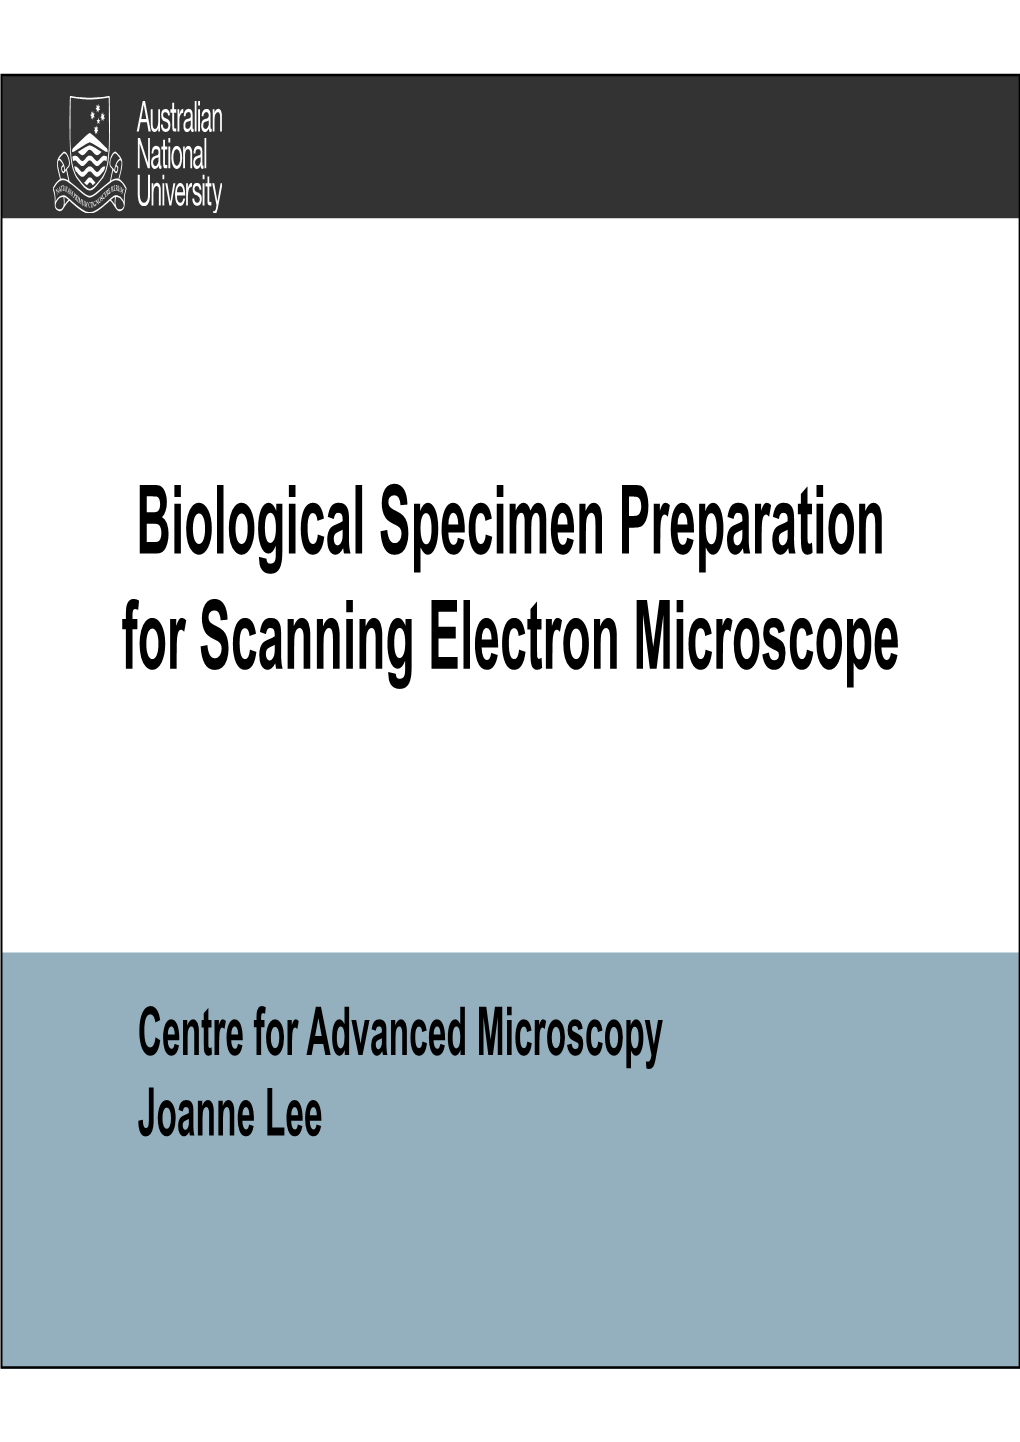 Biological Specimen Preparation for Scanning Electron Microscope